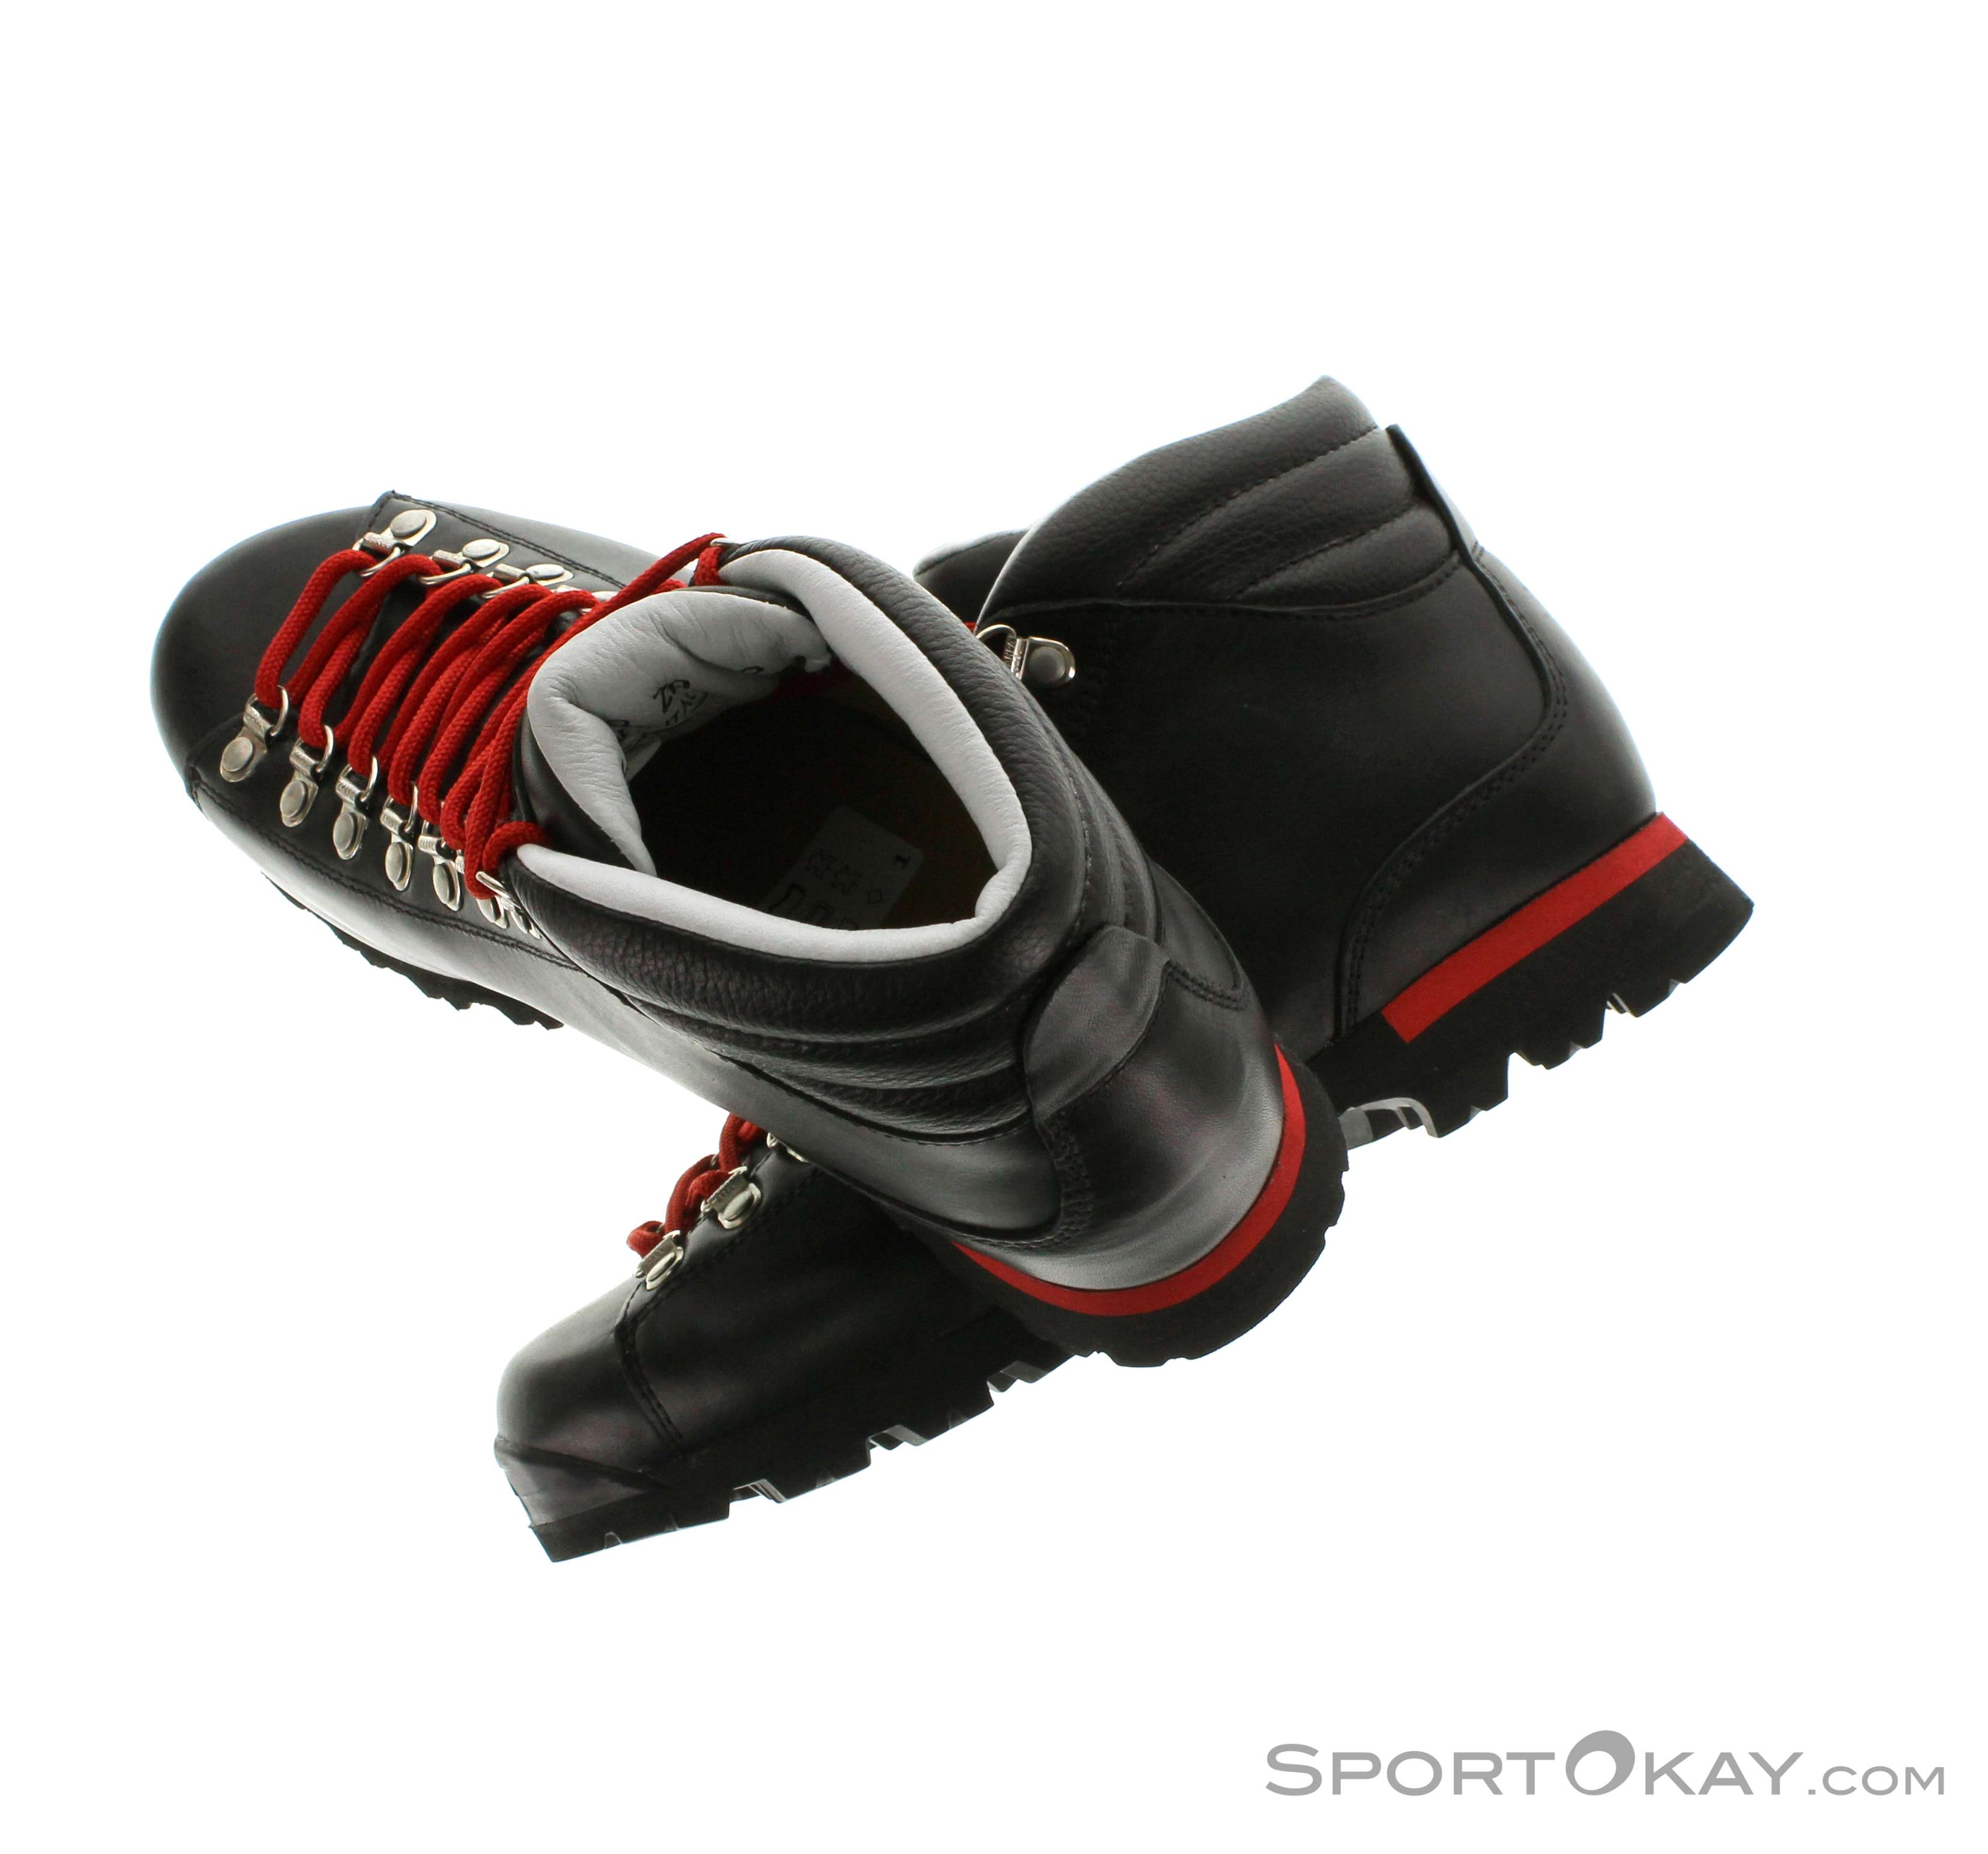 Scarpa Men's Primitive Trekking & Hiking Boots, Black Leather Za Piuma :  : Fashion